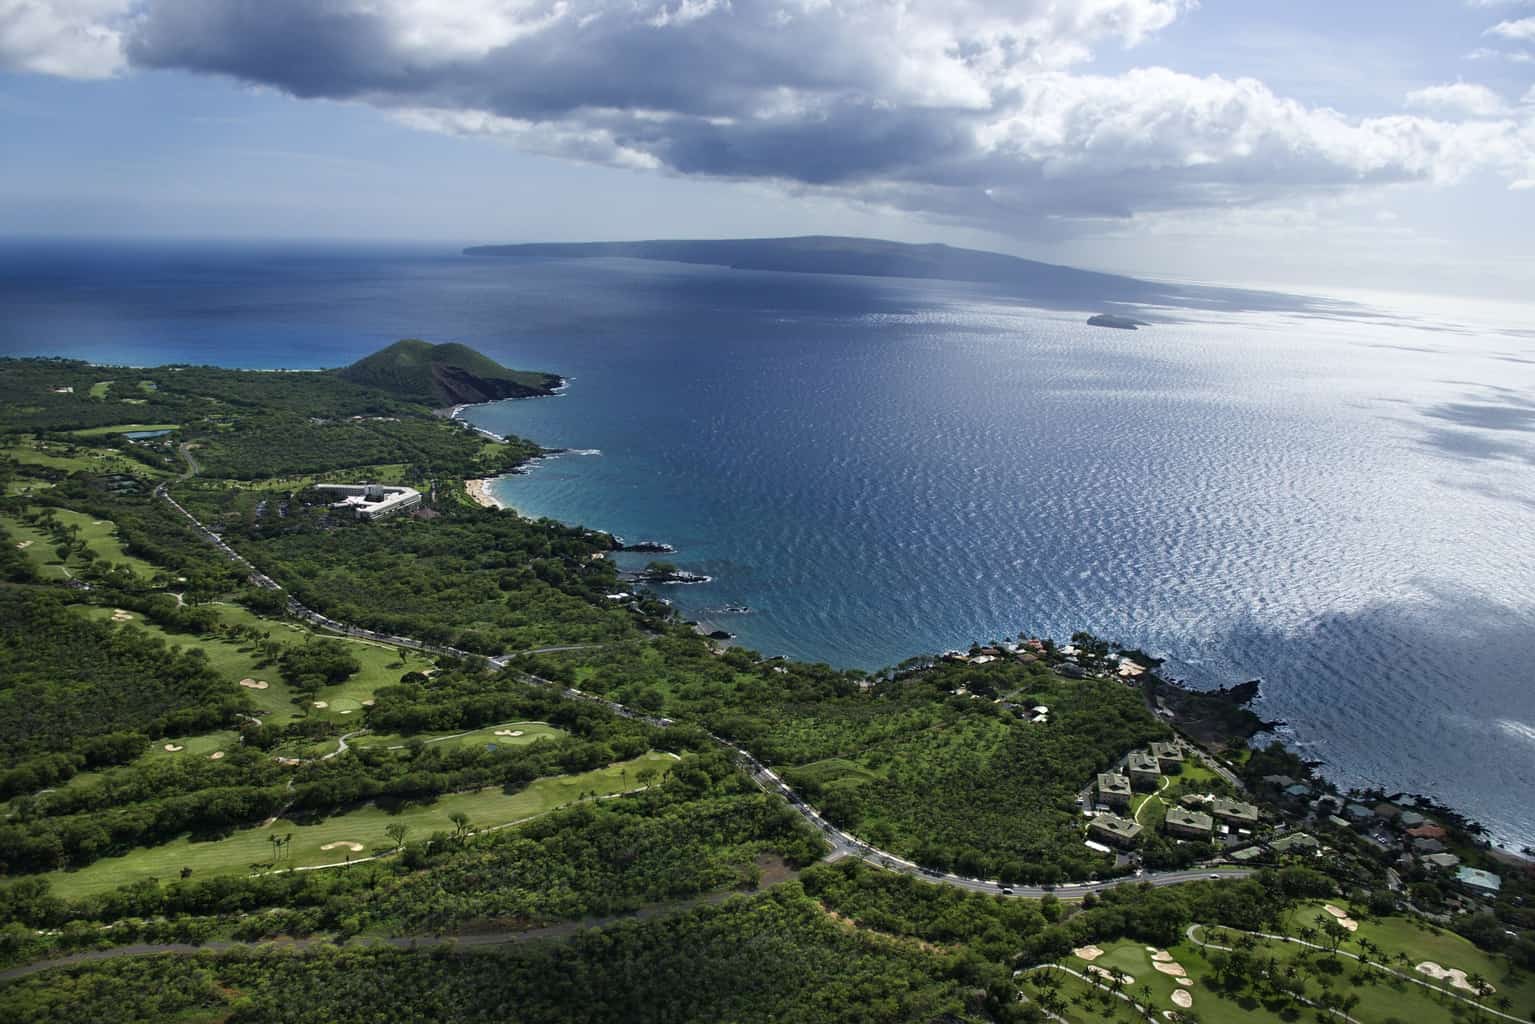 Maui Real Estate Report 2014